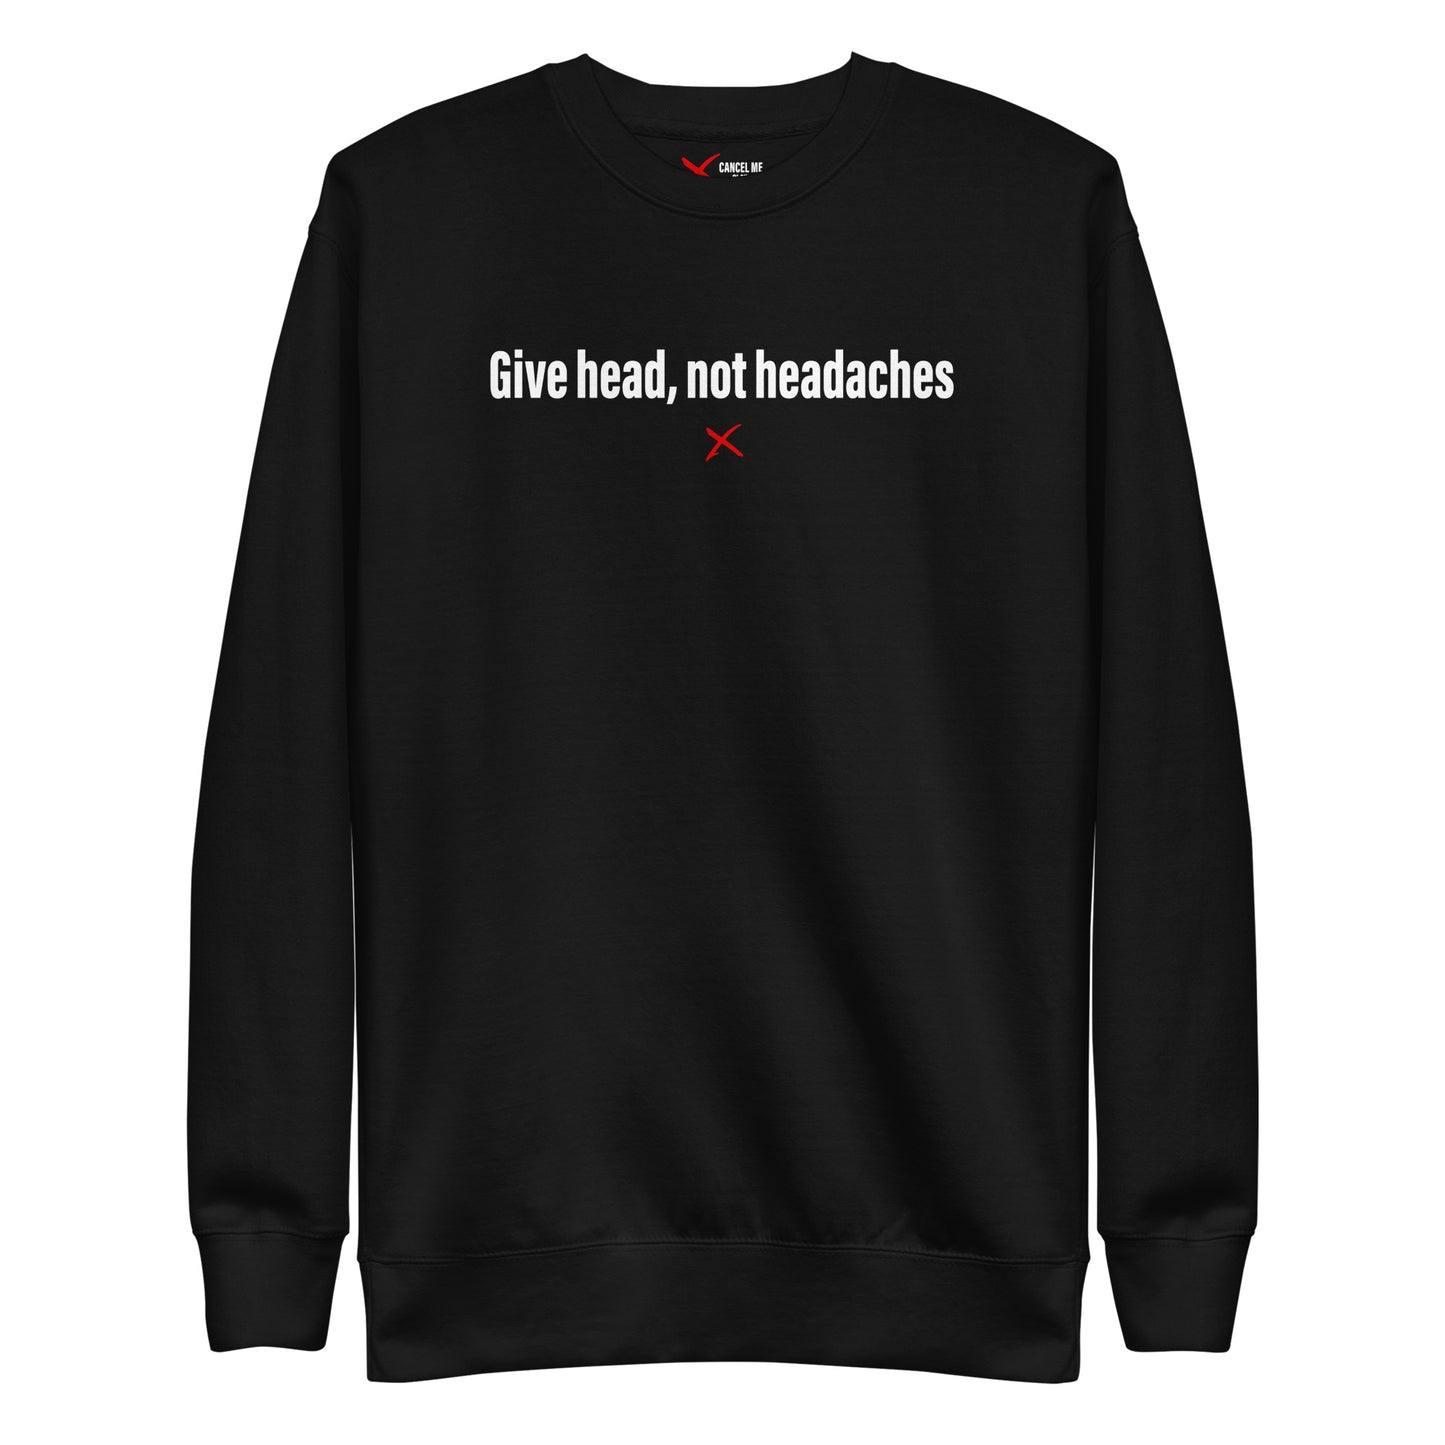 Give head, not headaches - Sweatshirt